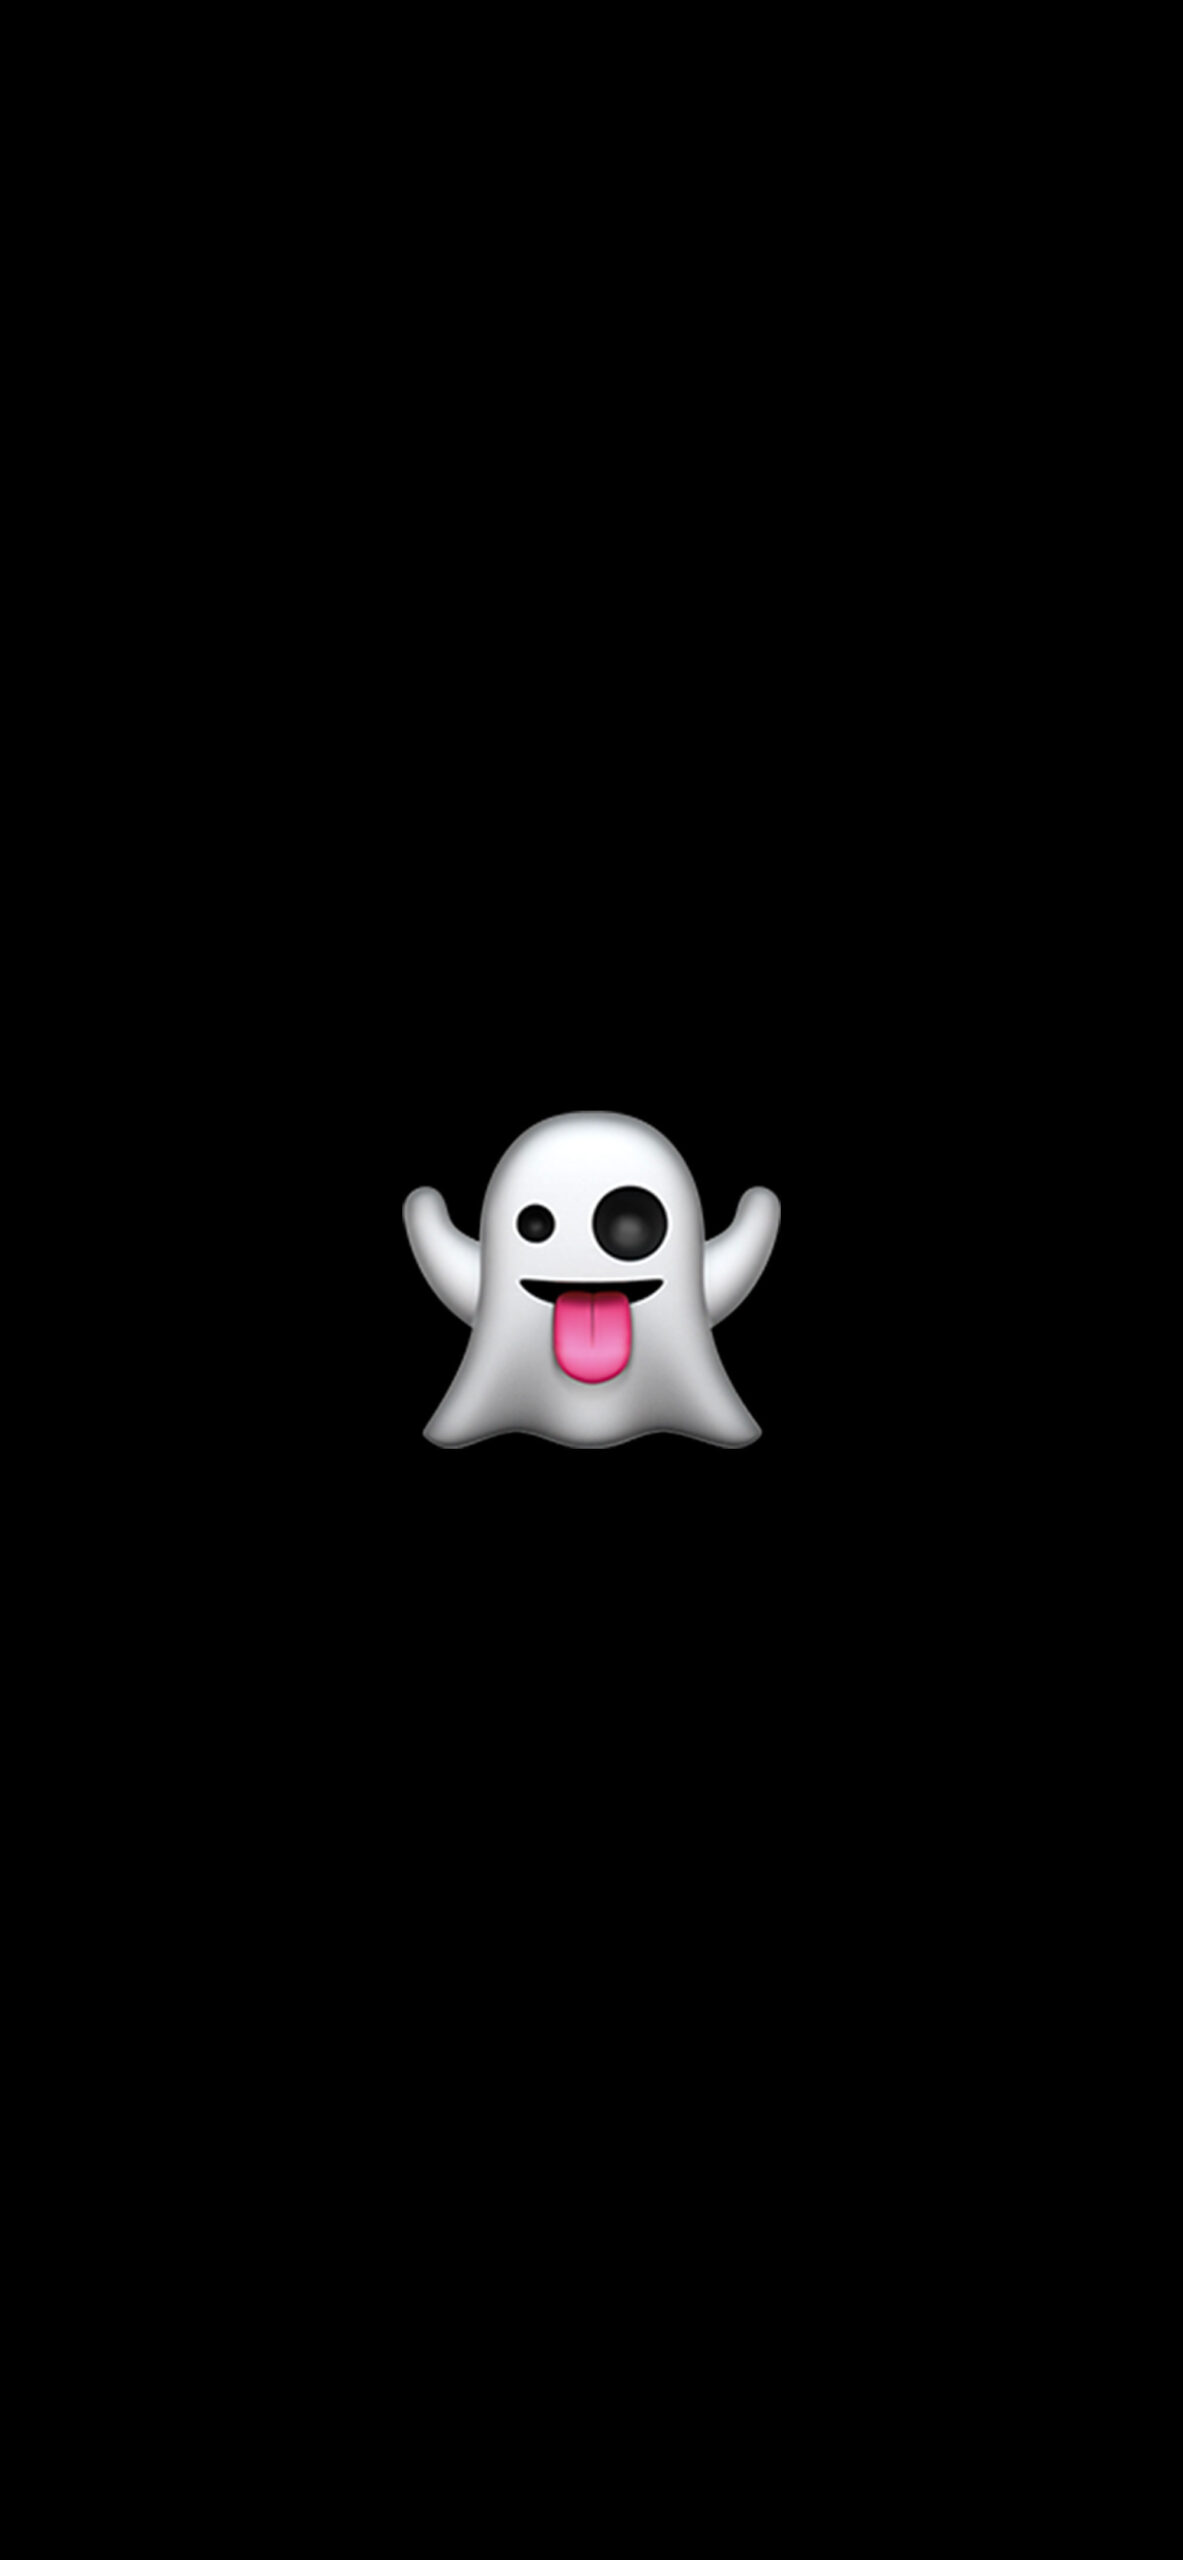 ghost emoji aesthetic wallpaper